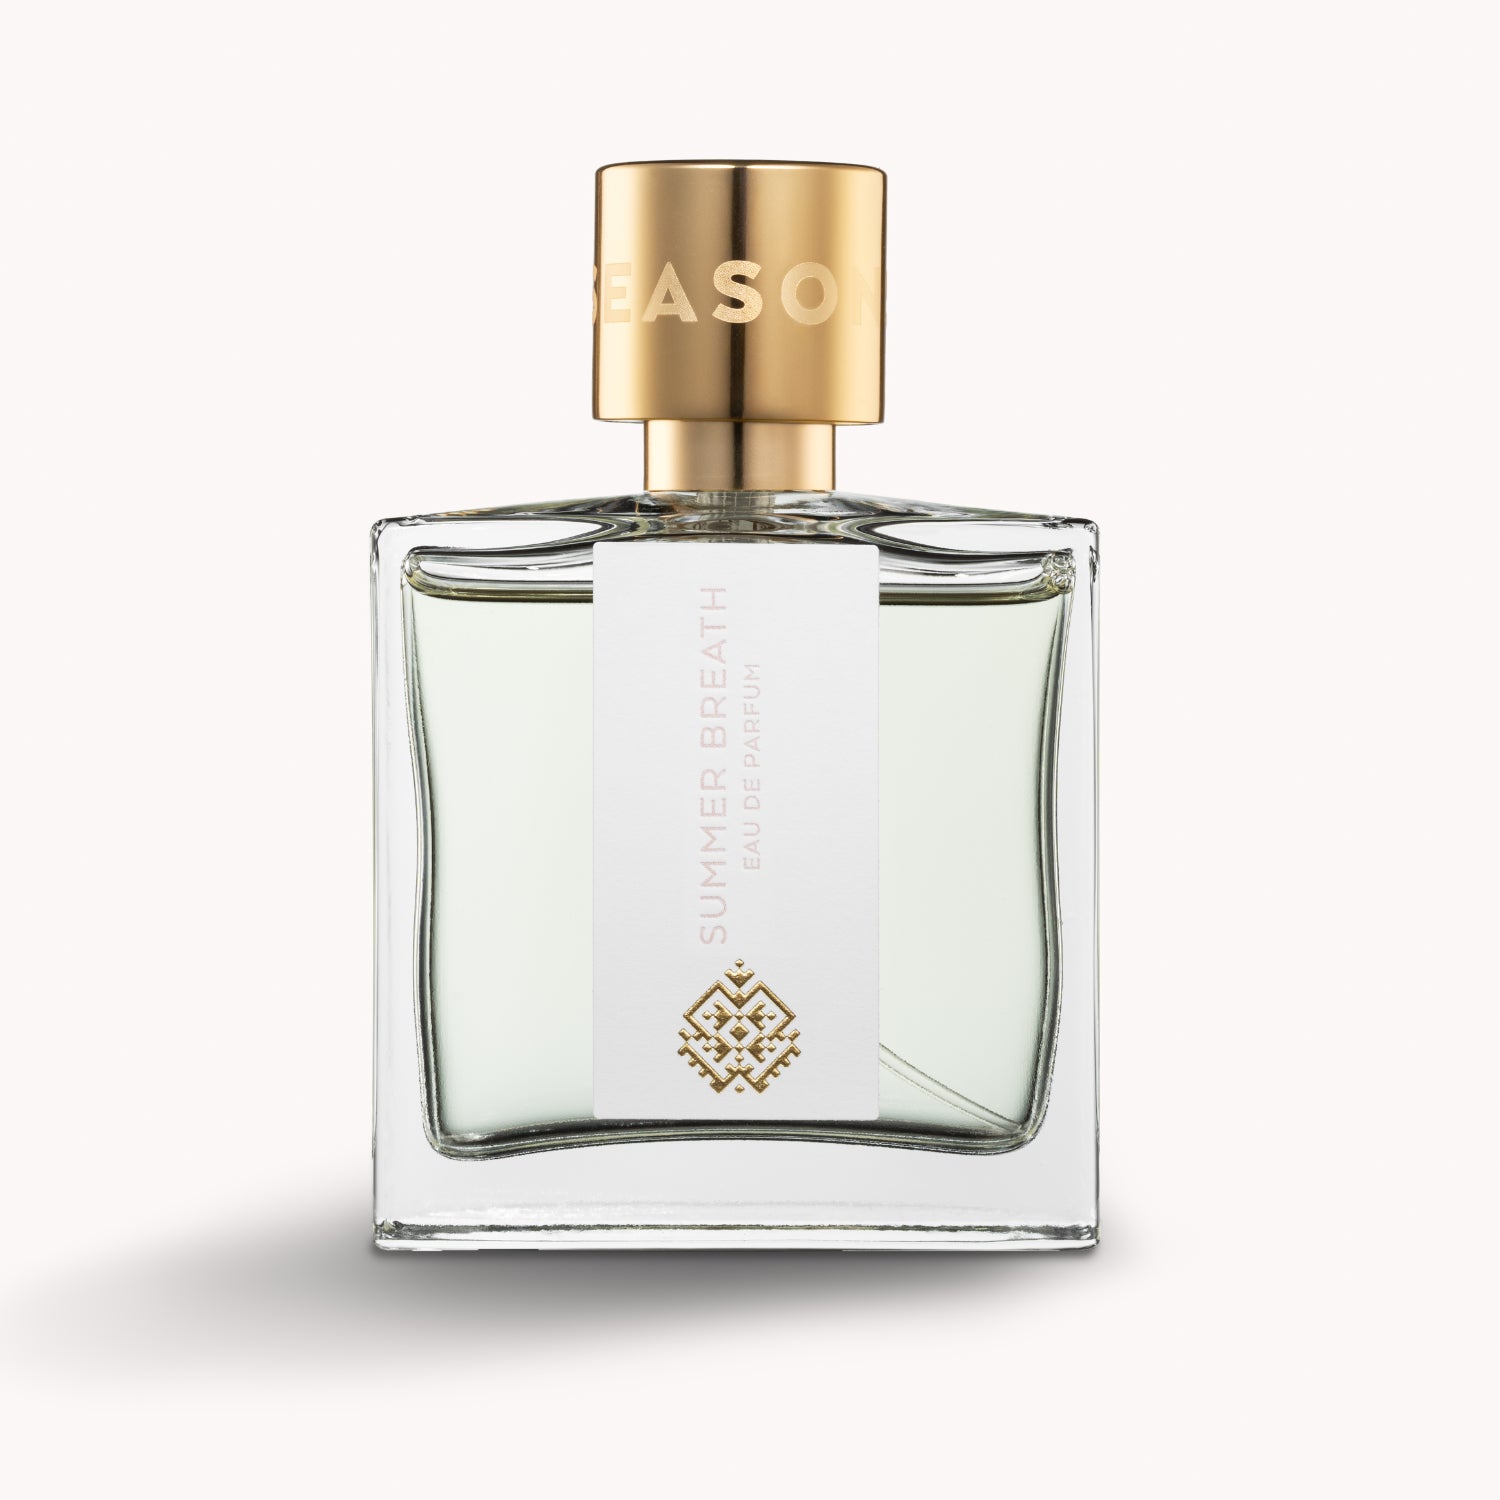 Summer Breath Eau De Parfum 50ml - Luxury Unisex Perfume for Men and Women